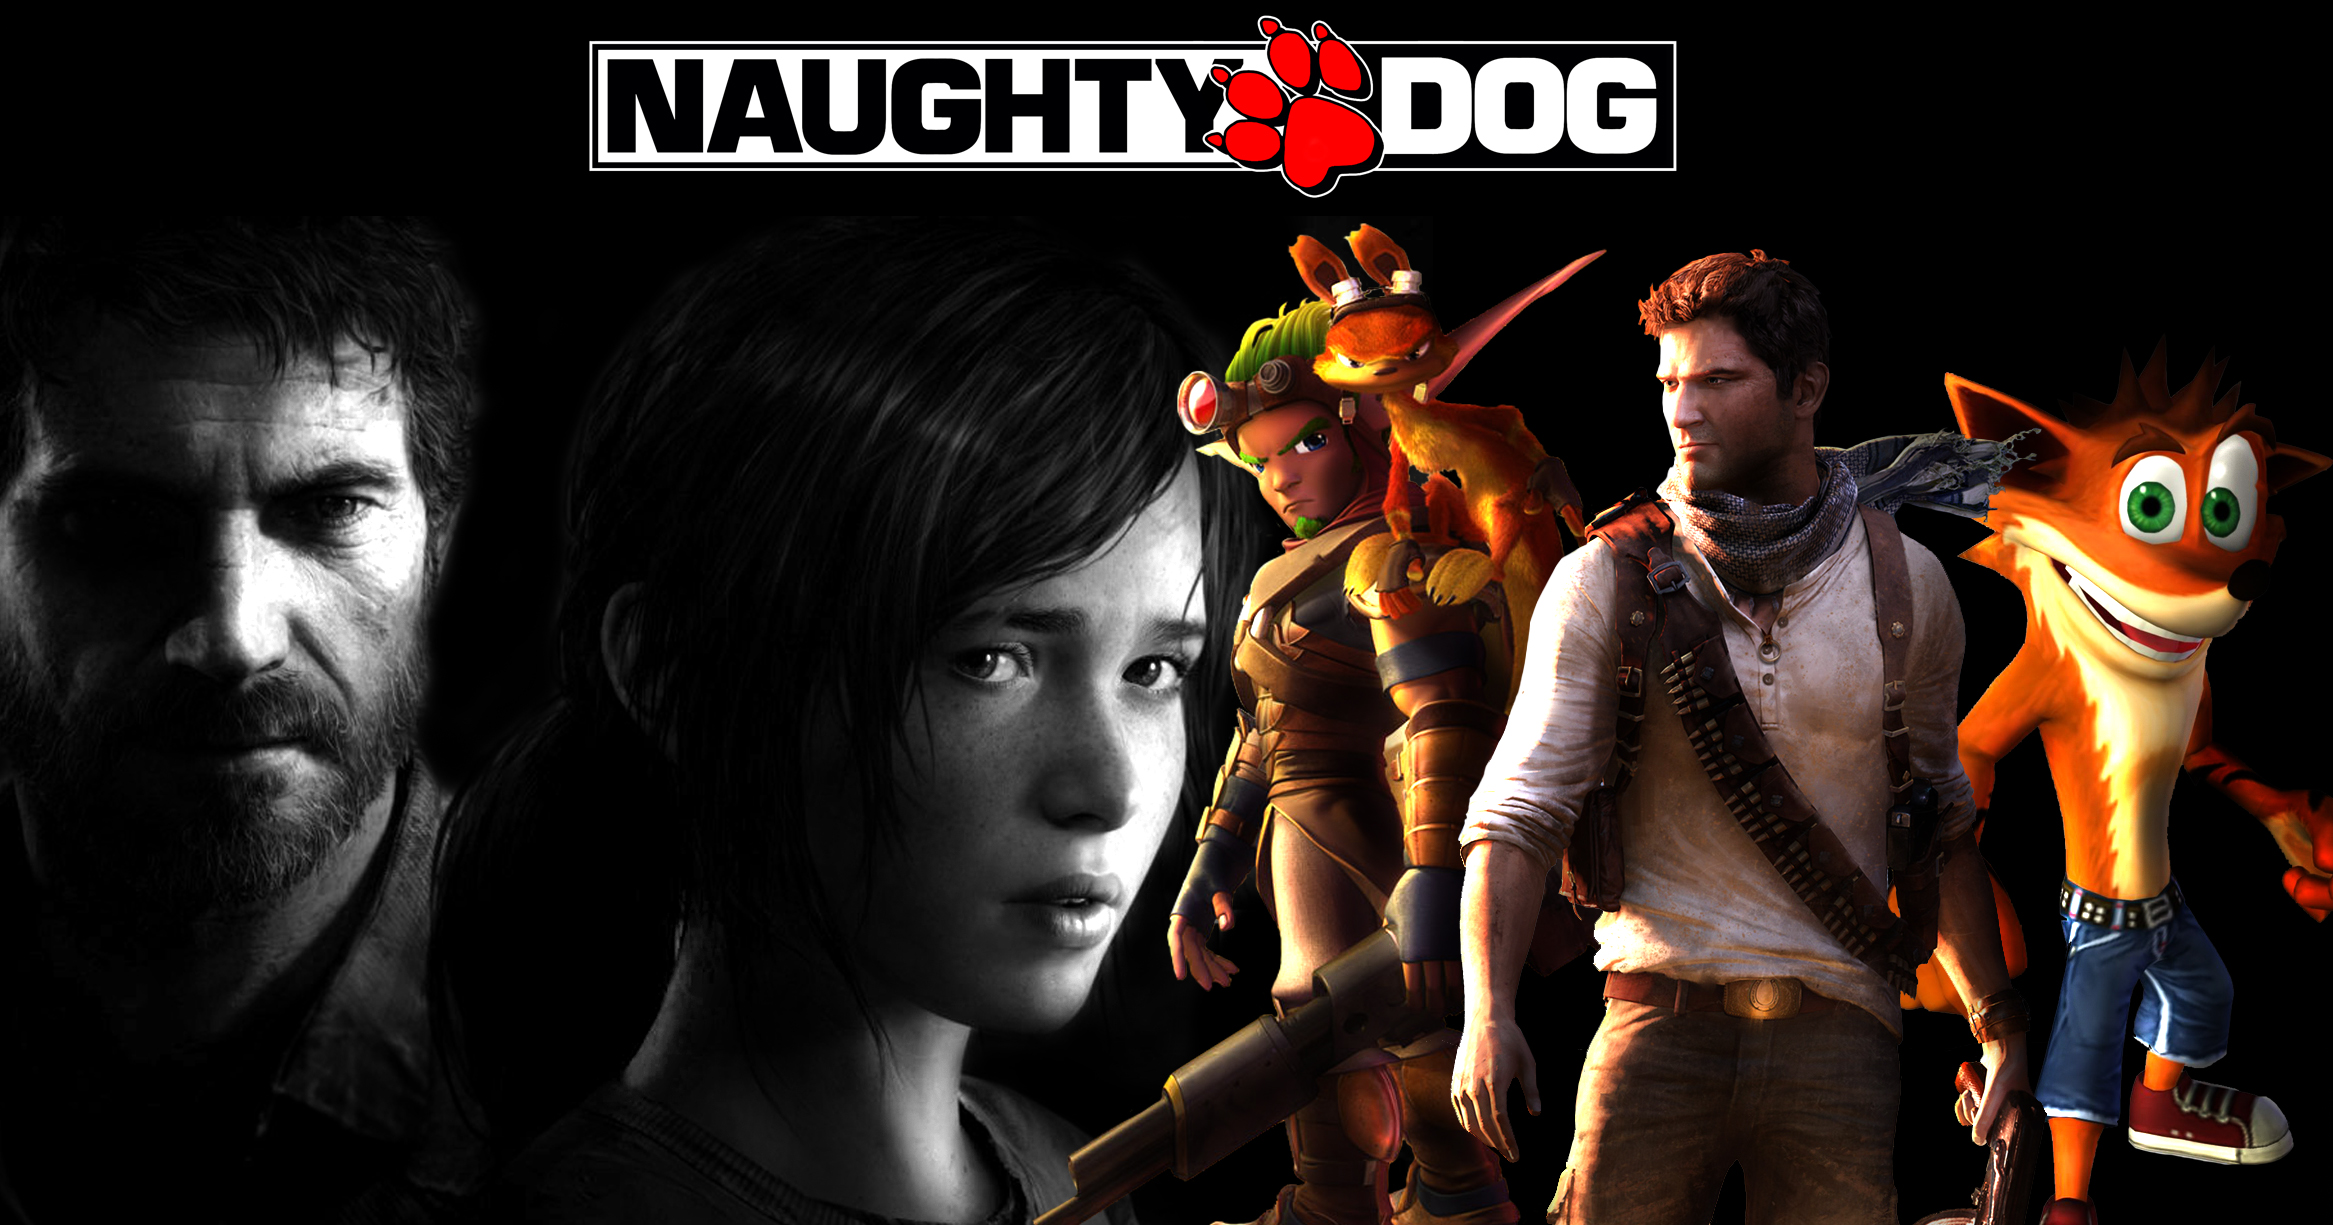 Naughty Dog HD wallpapers, Desktop wallpaper - most viewed